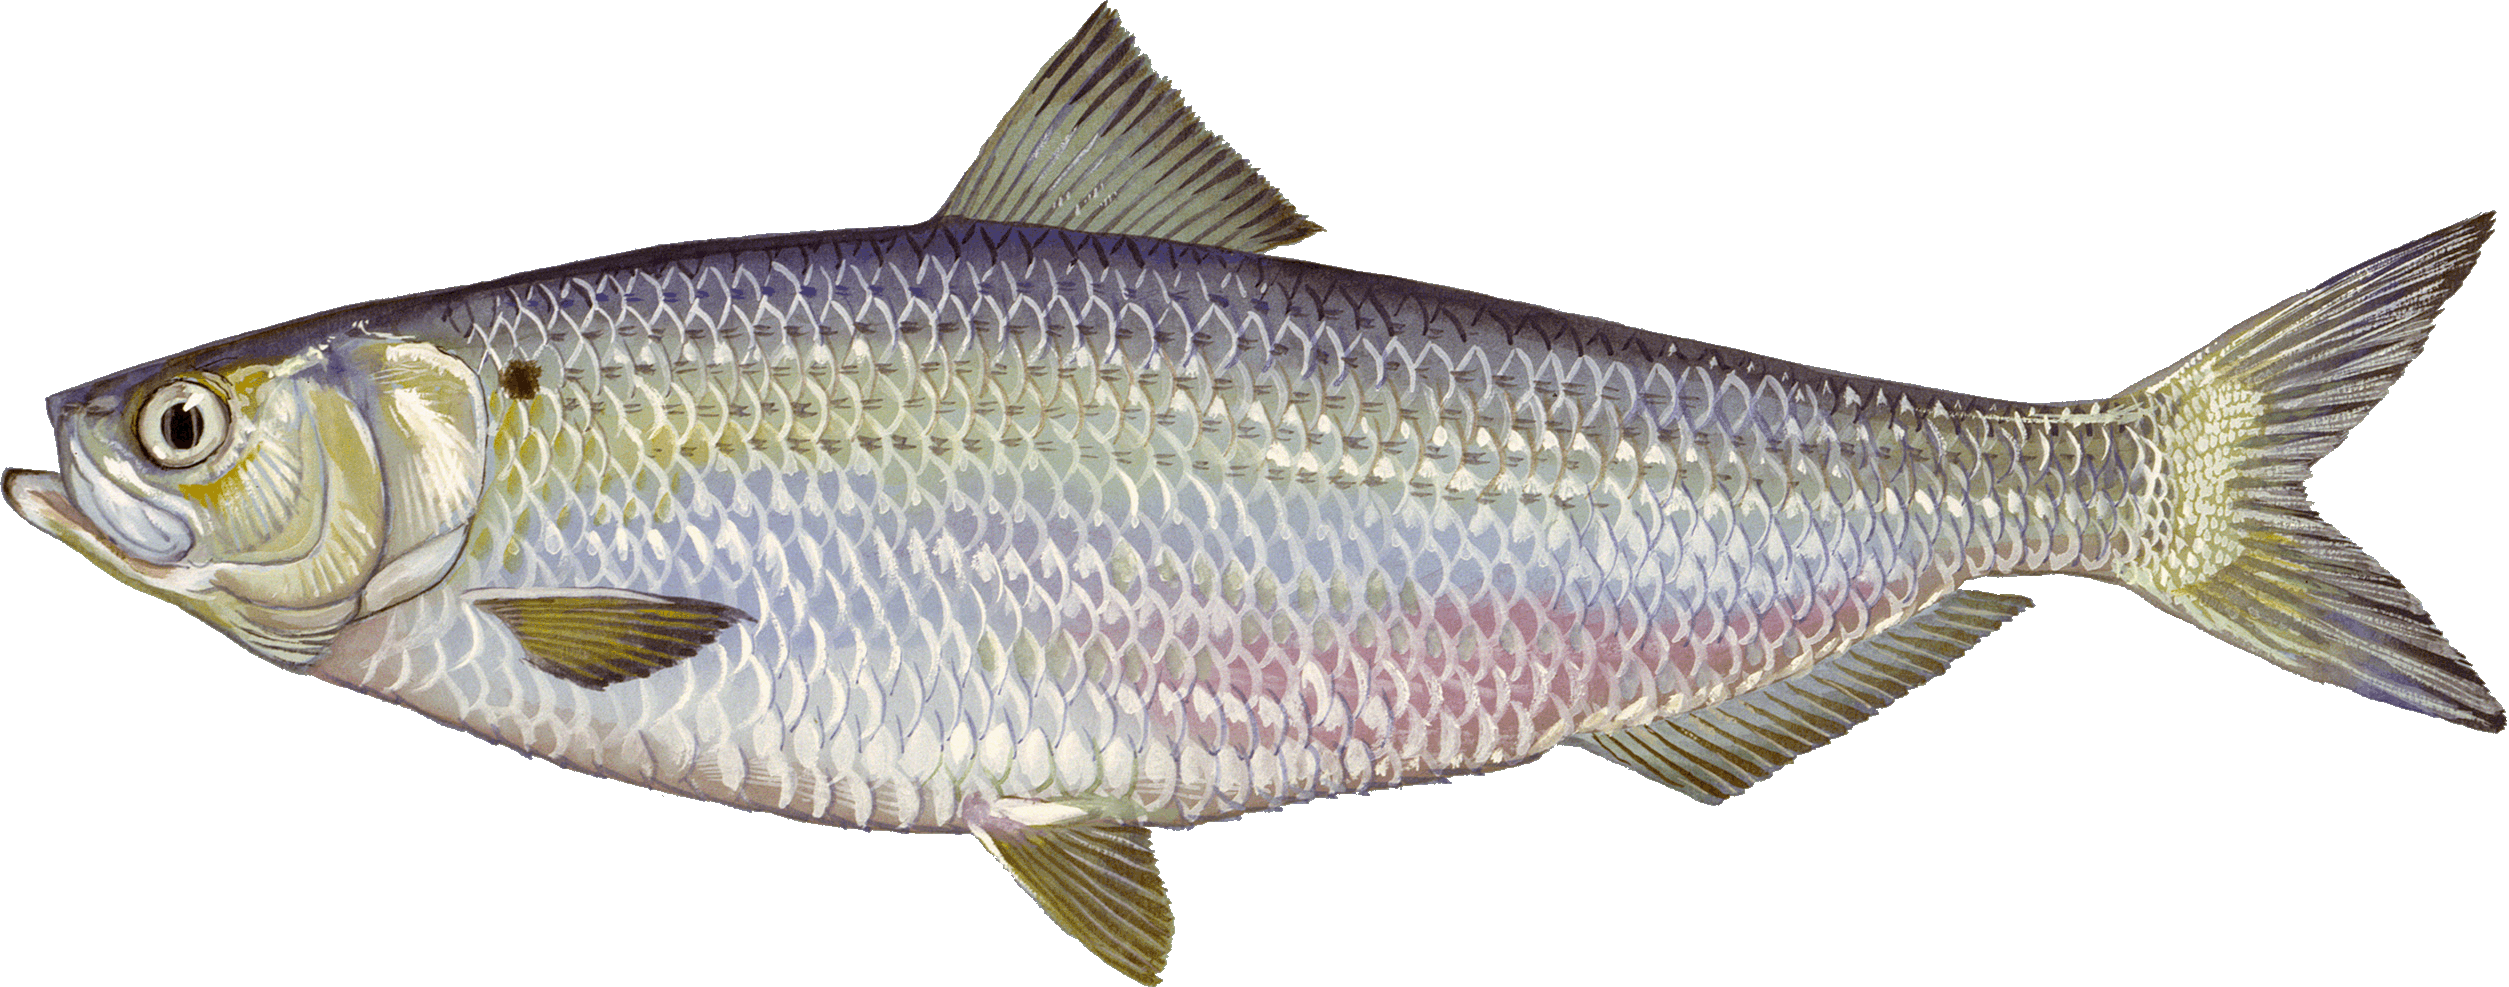 Blueback herring illustration